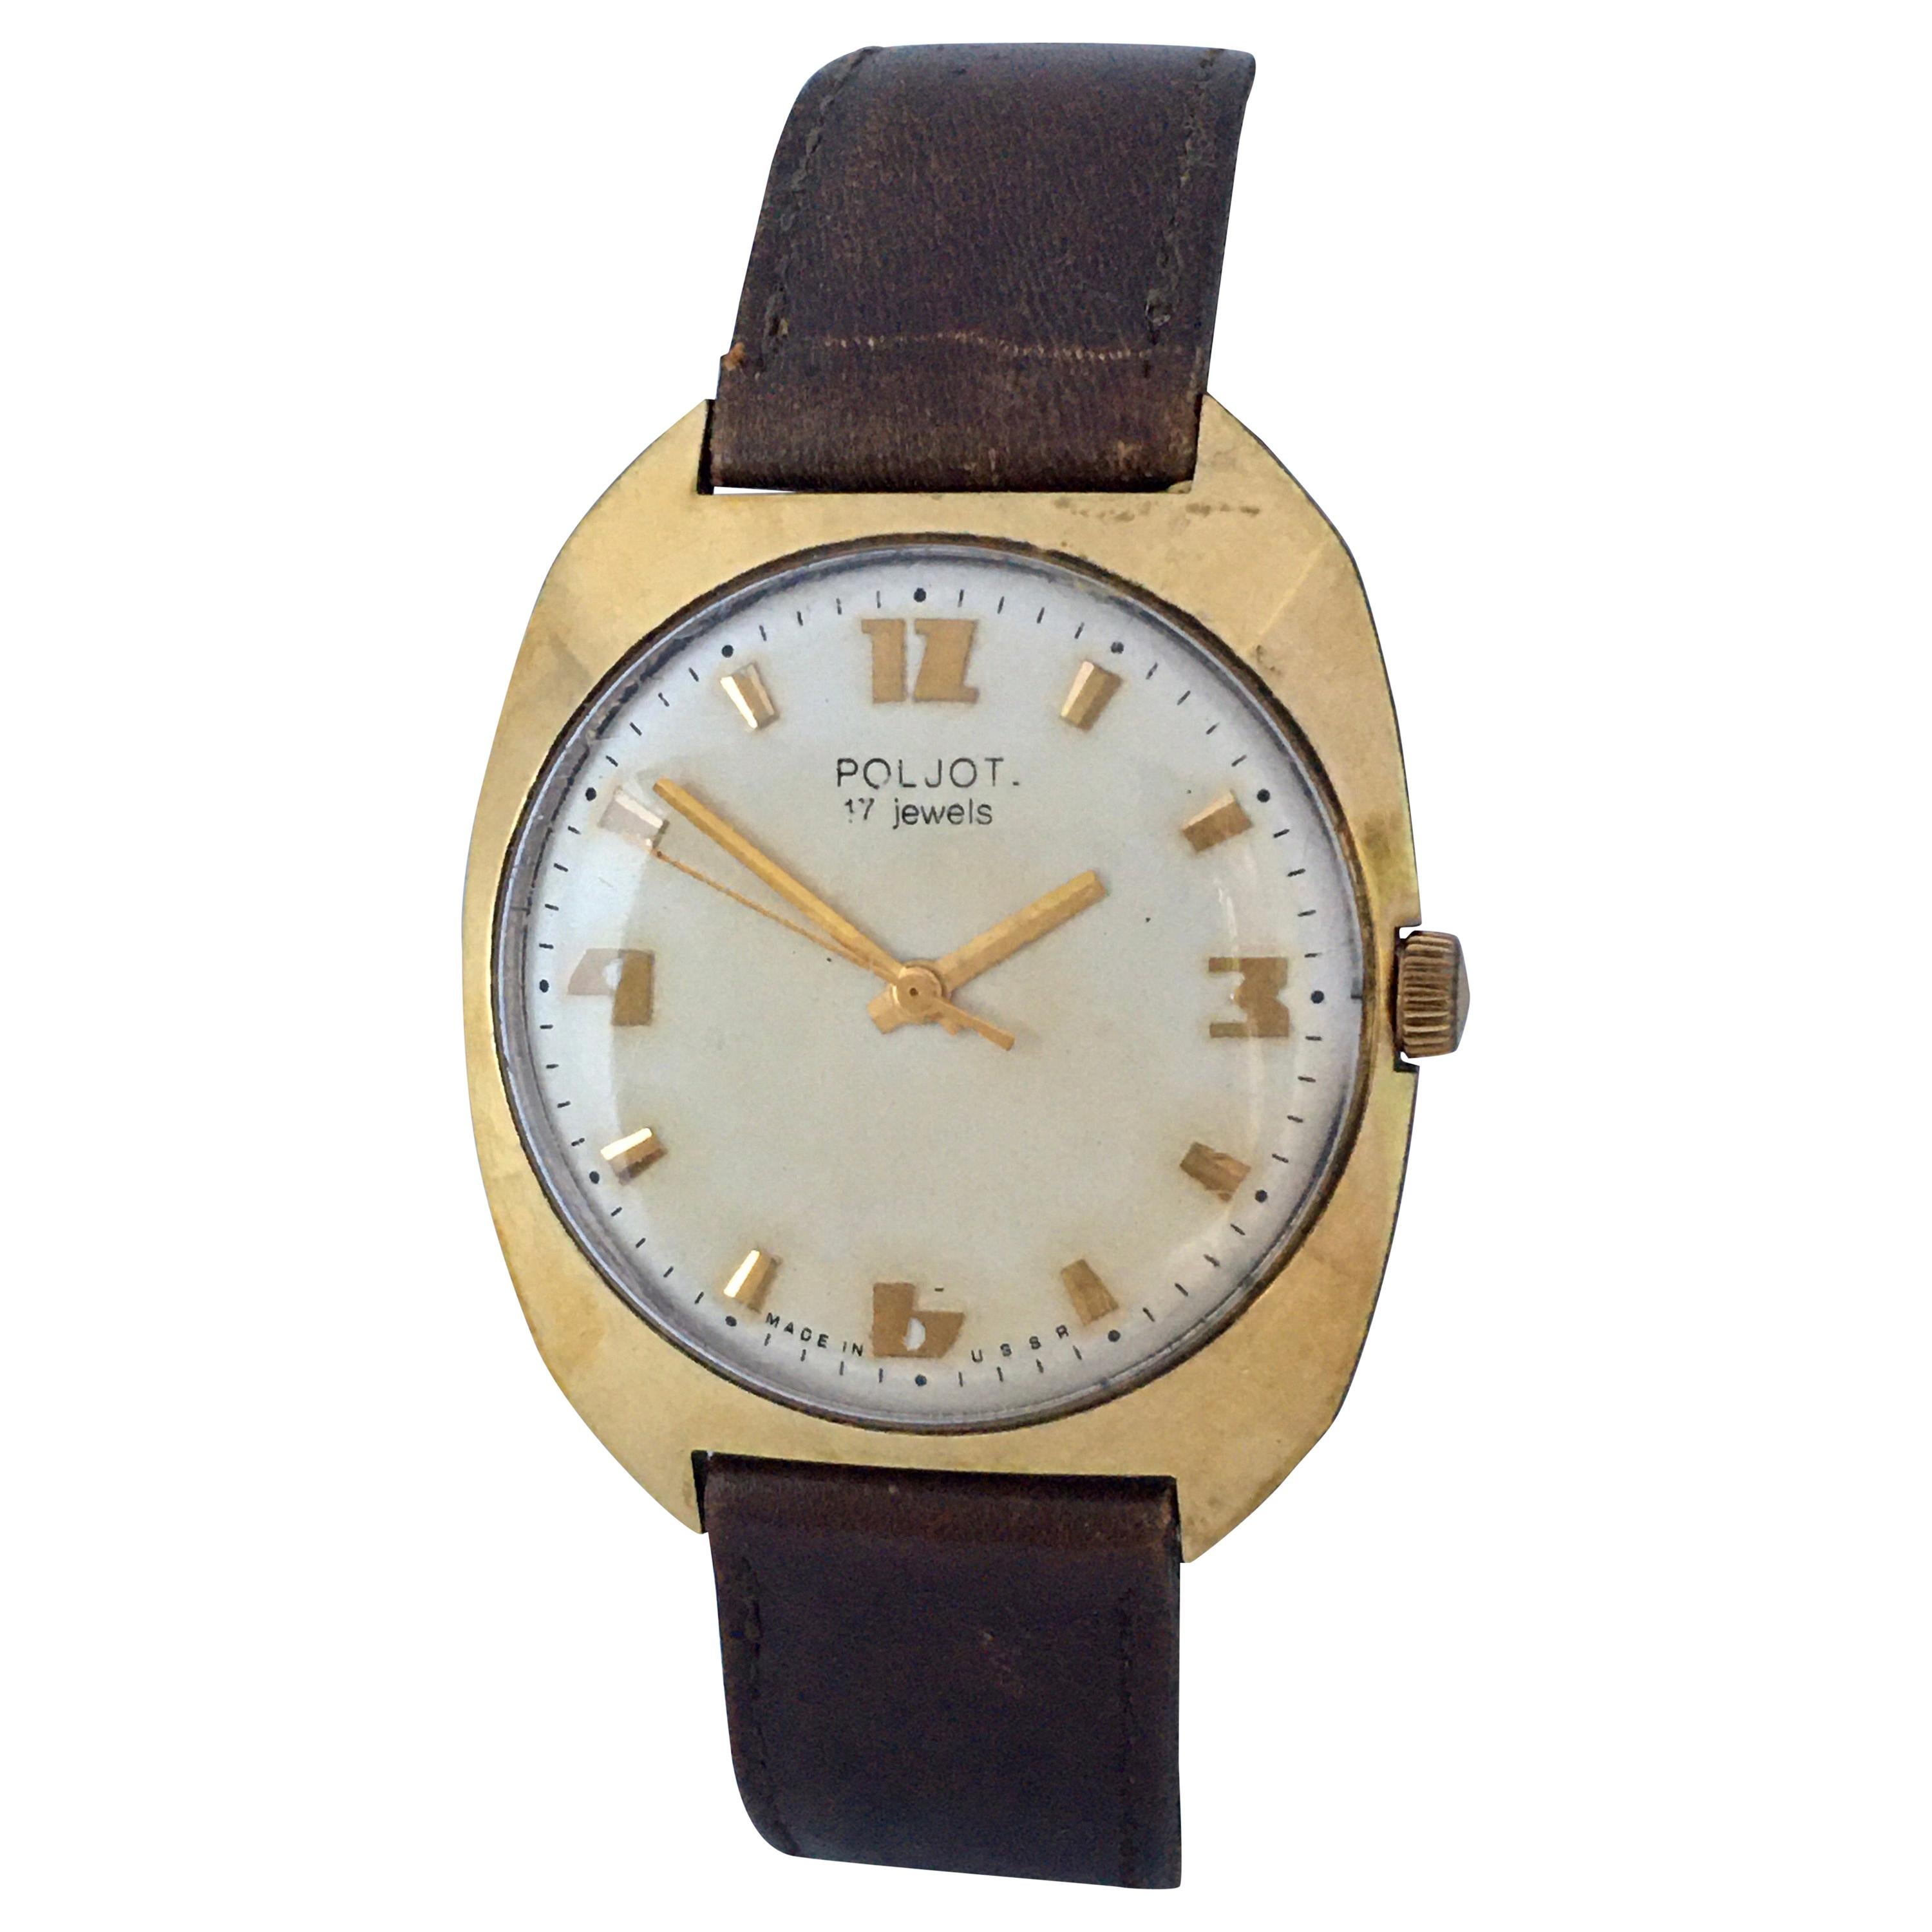 Vintage 1970s AU20 Gold-Plated POLJOT Mechanical Watch